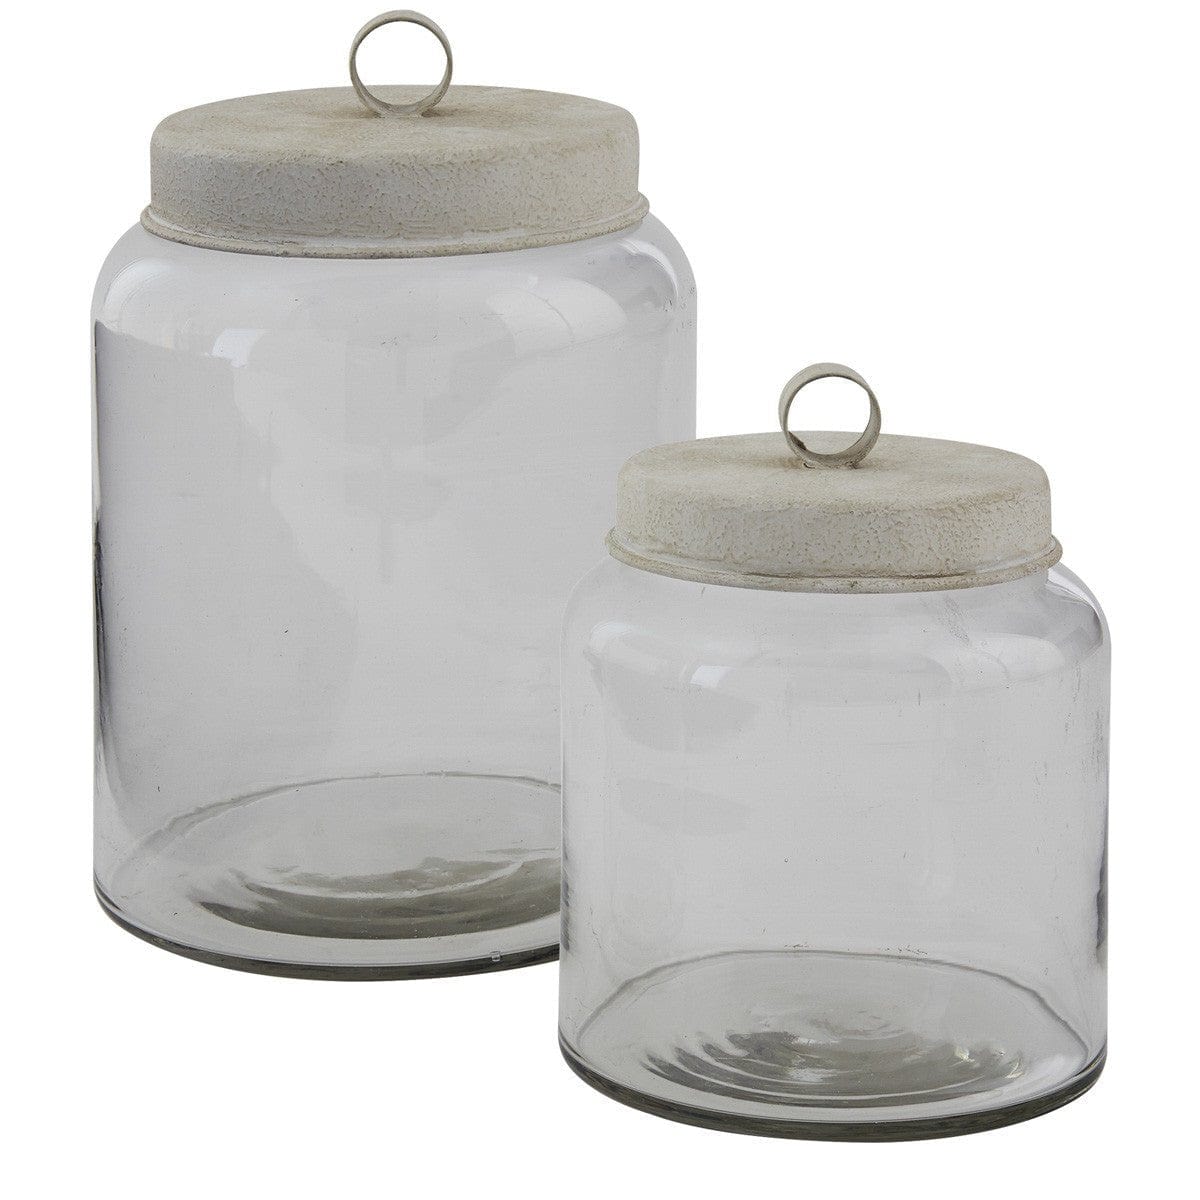 Glass Jar With Metal Lids Set of 2 - Assorted Sizes-Park Designs-The Village Merchant